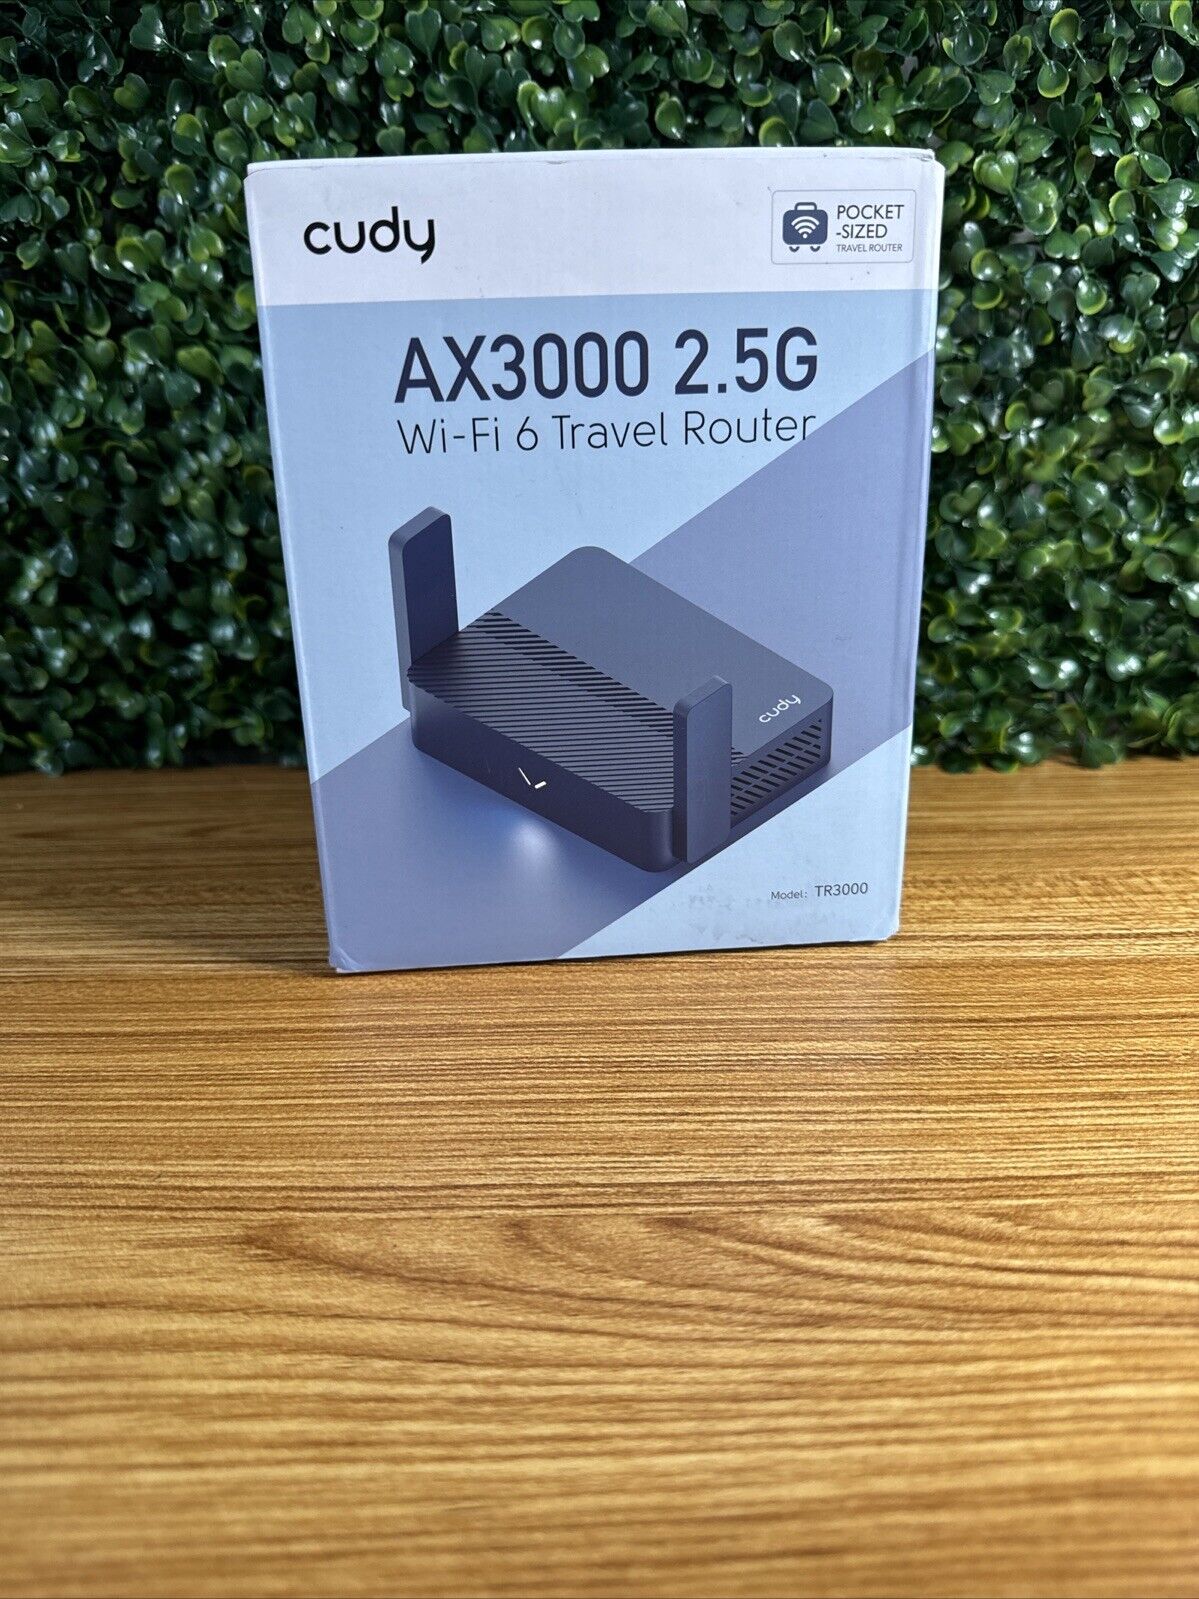 Cudy AX3000 2.5G Wi-Fi 6 Travel Router TR3000 Pocket-Sized